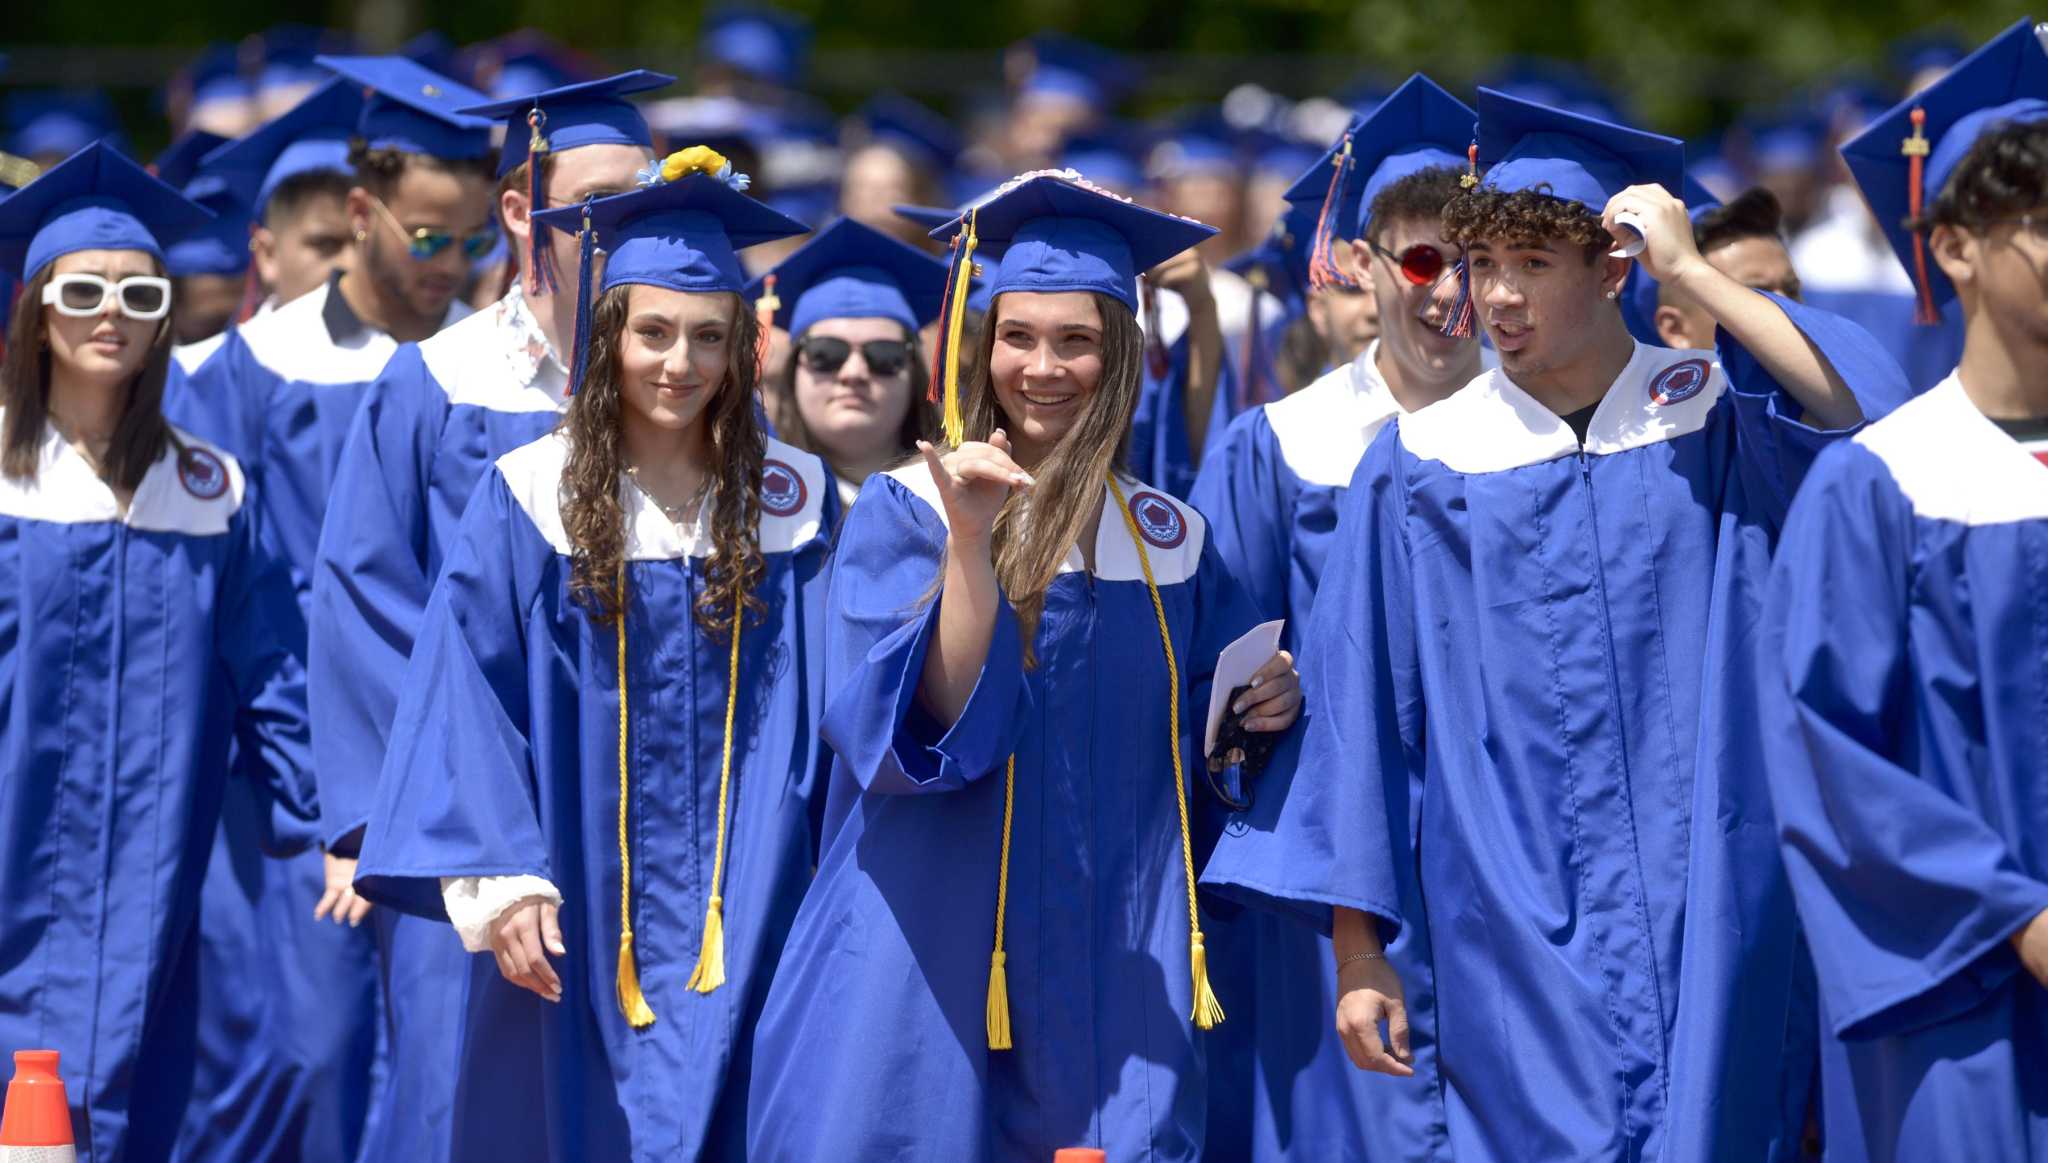 Photos Danbury High School students graduate ‘You all did it’